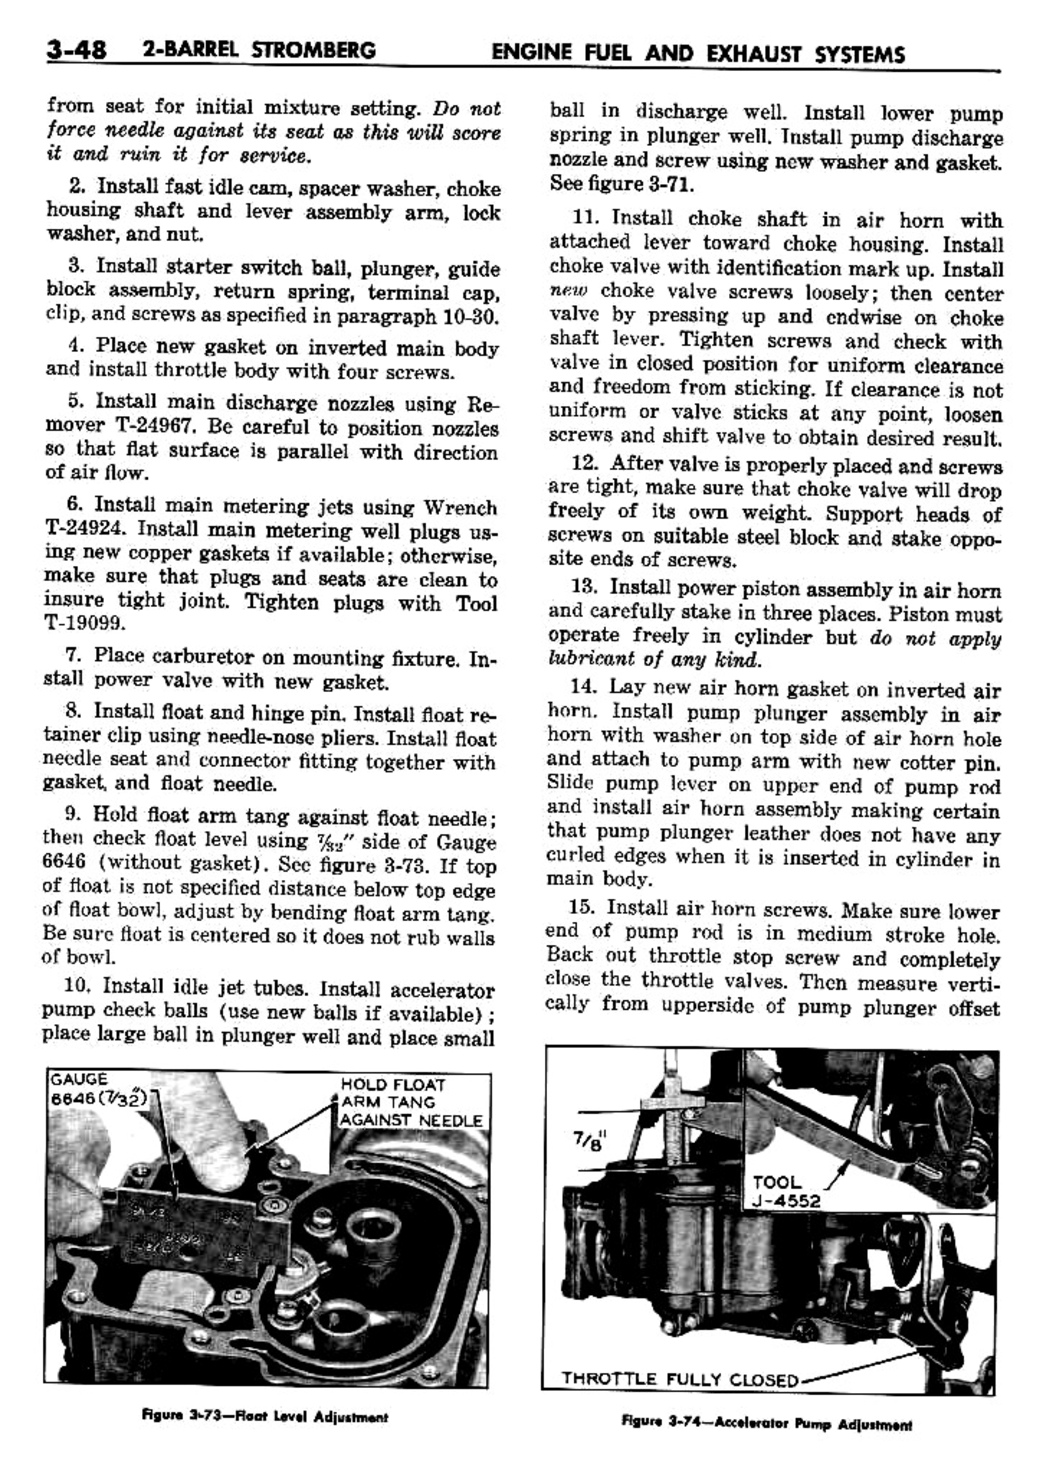 n_04 1957 Buick Shop Manual - Engine Fuel & Exhaust-048-048.jpg